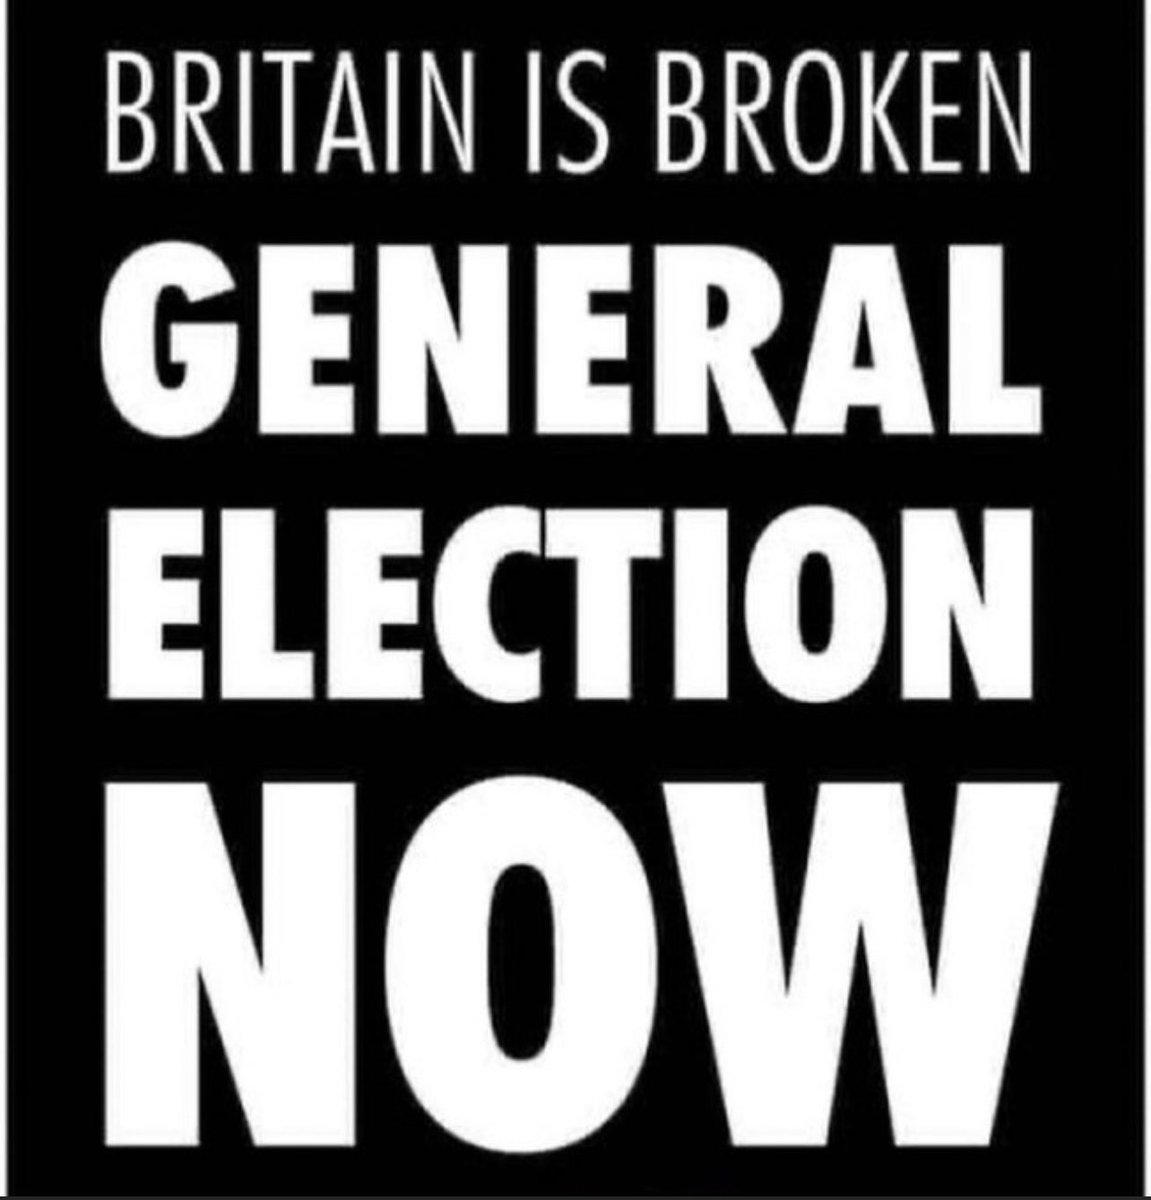 @GOV2UK #GeneralElectionNow 
#ToriesOut646